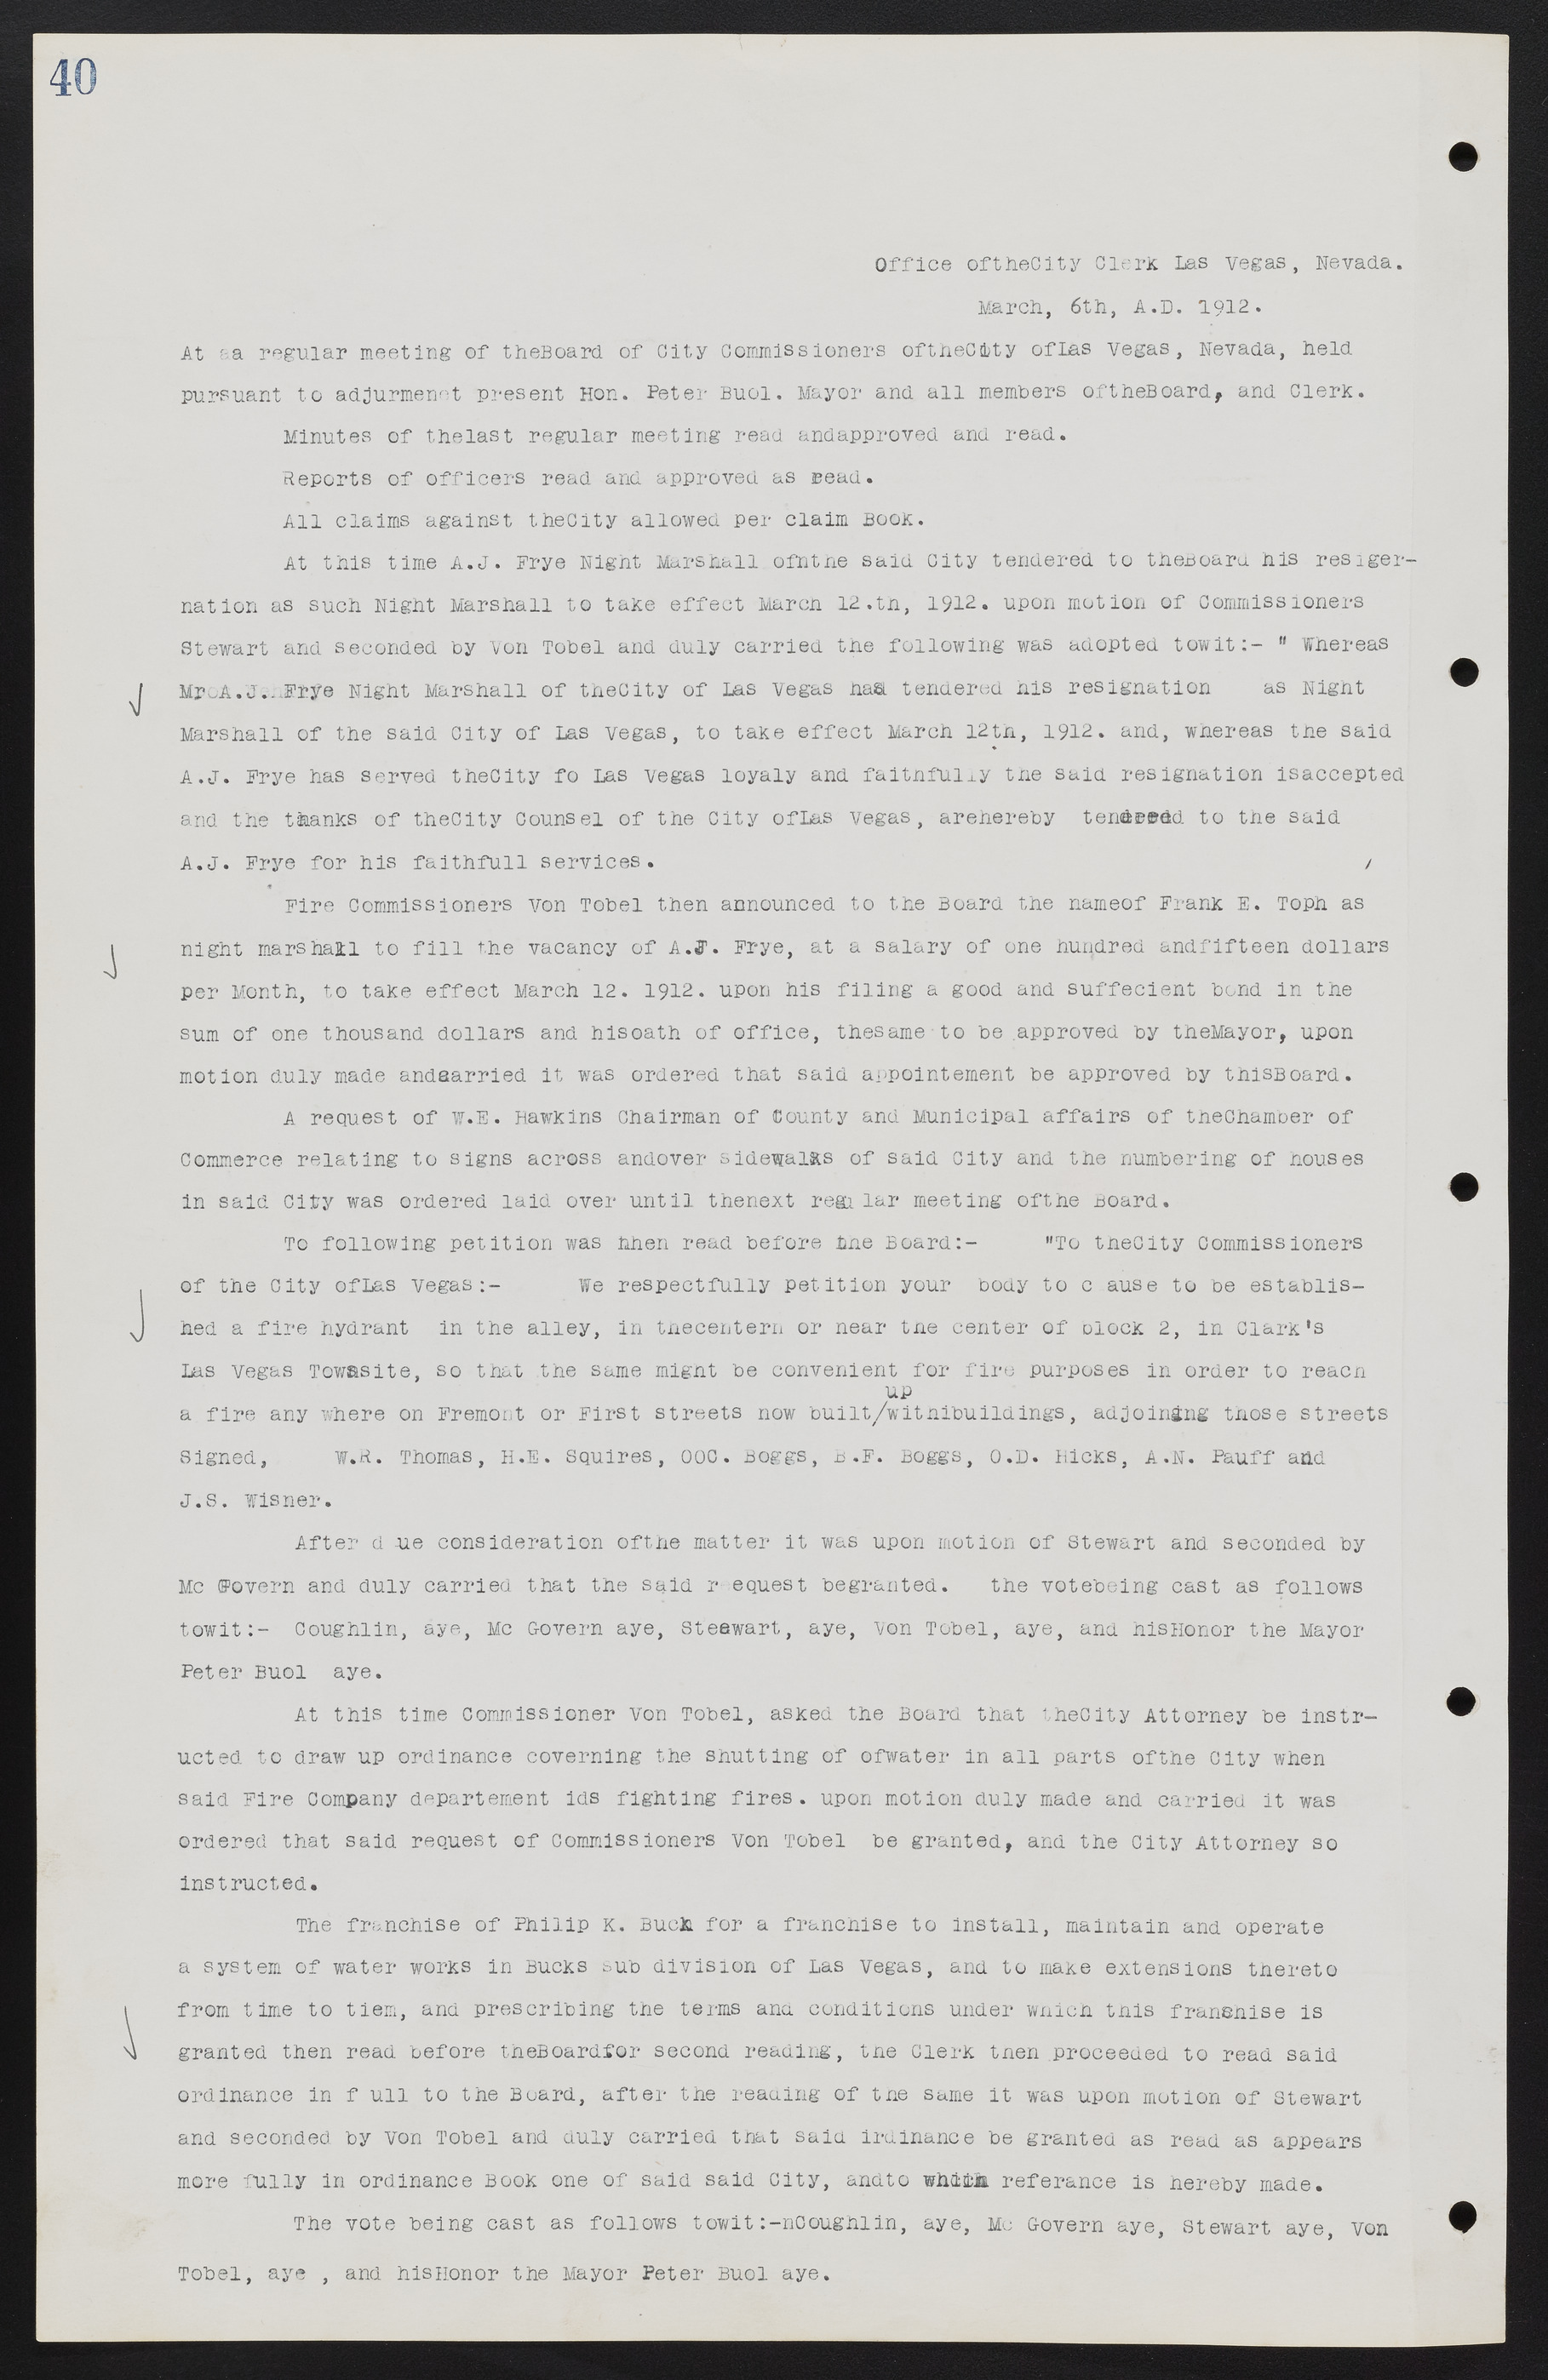 Las Vegas City Commission Minutes, June 22, 1911 to February 7, 1922, lvc000001-54